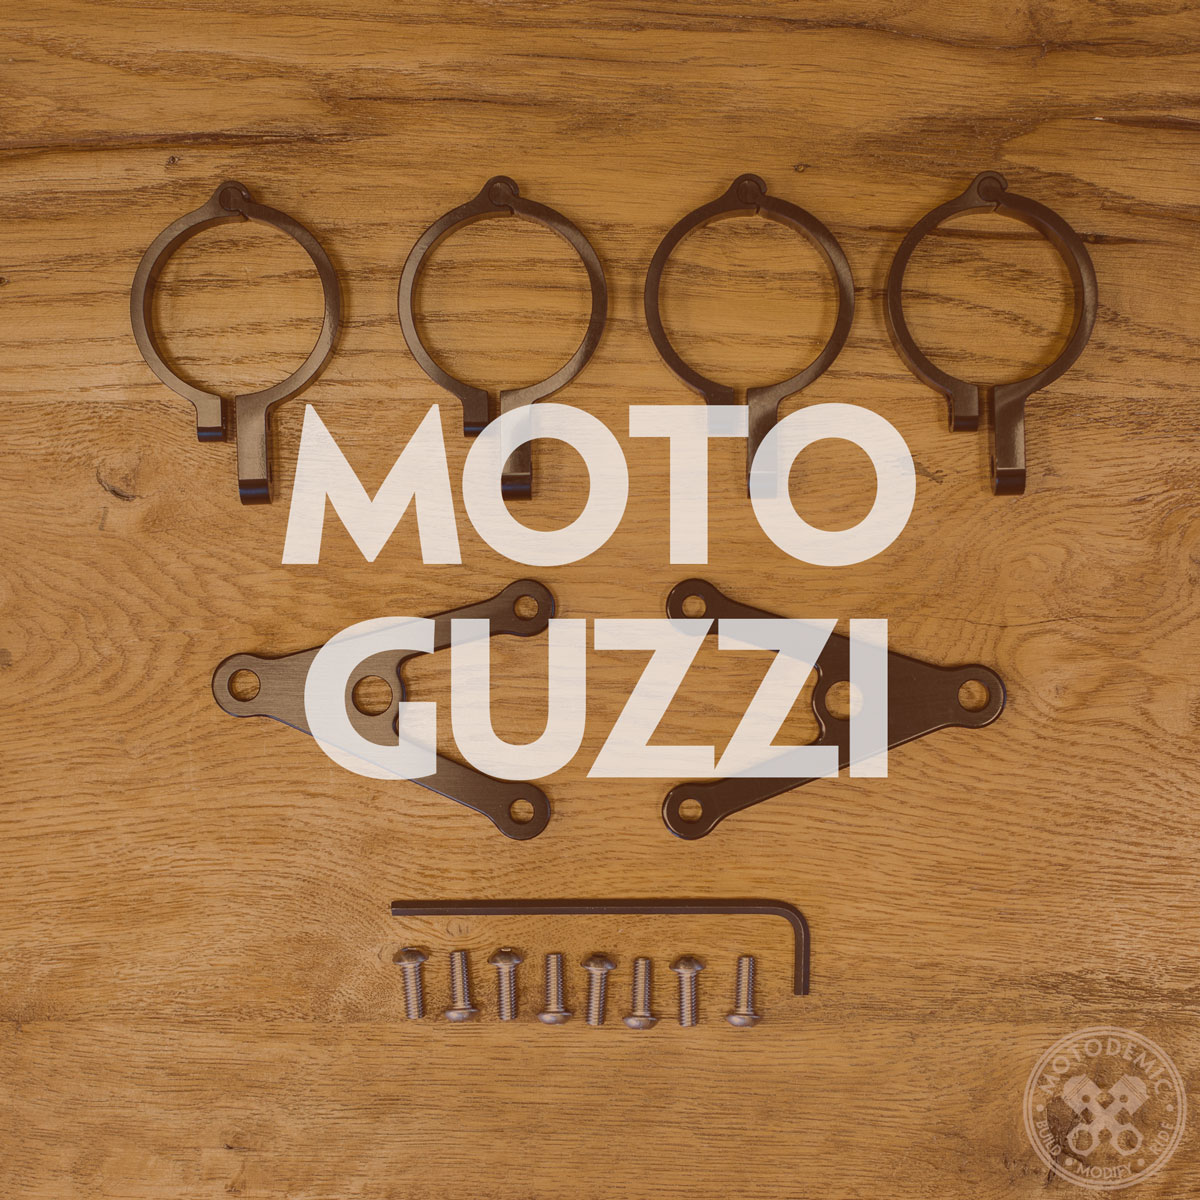 Bates headlight bracket for Moto Guzzi V9